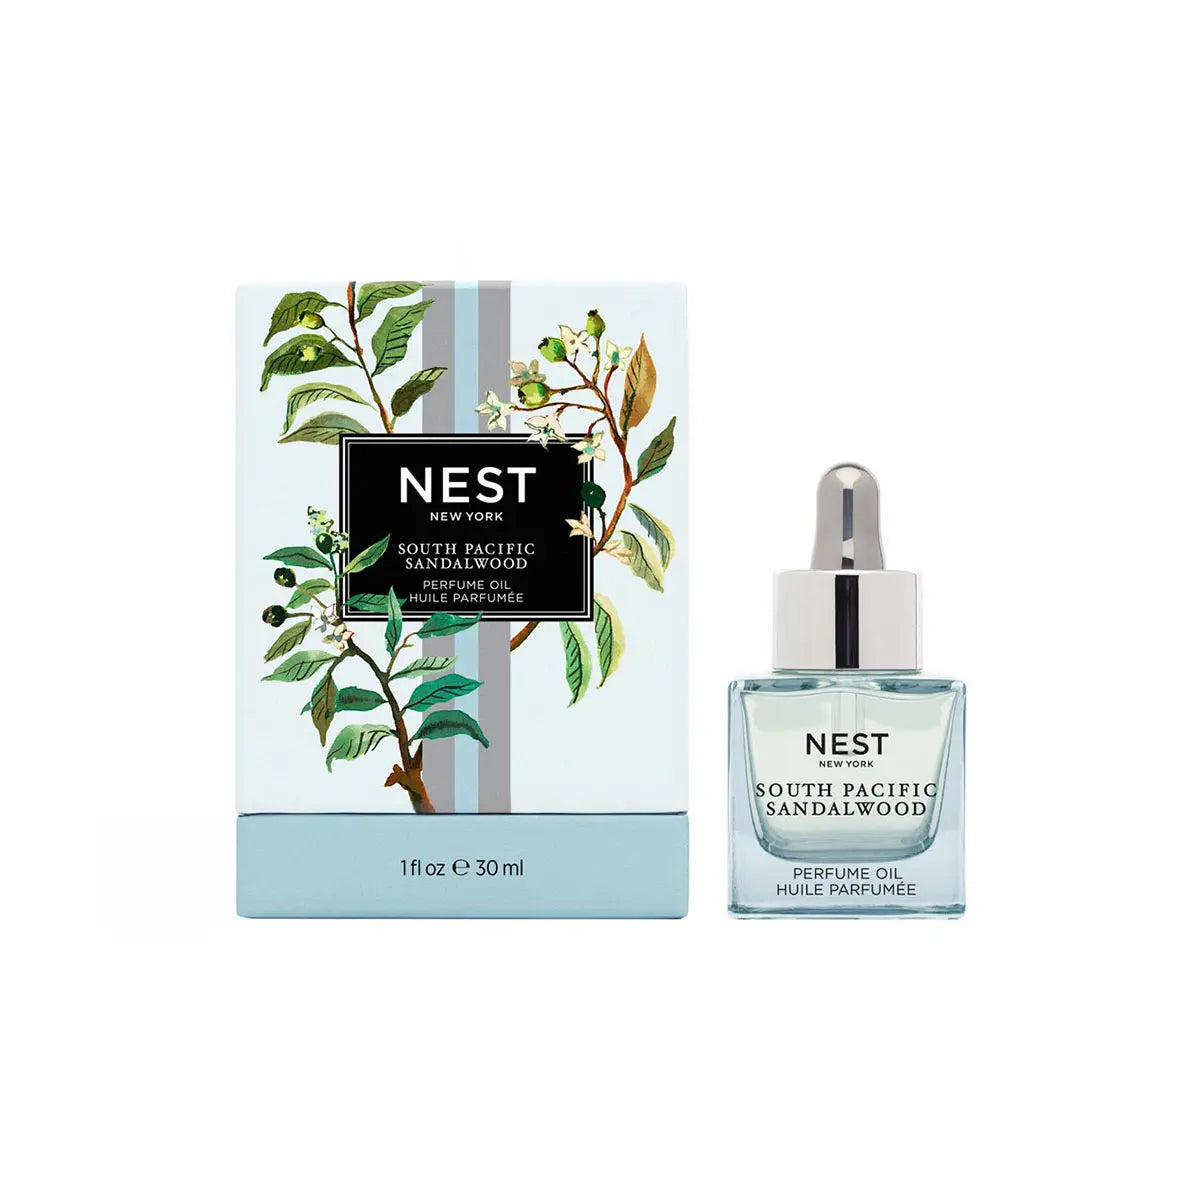 Nest Perfume Oil 30mL/1.0 fl oz. in South Pacific Sandalwood